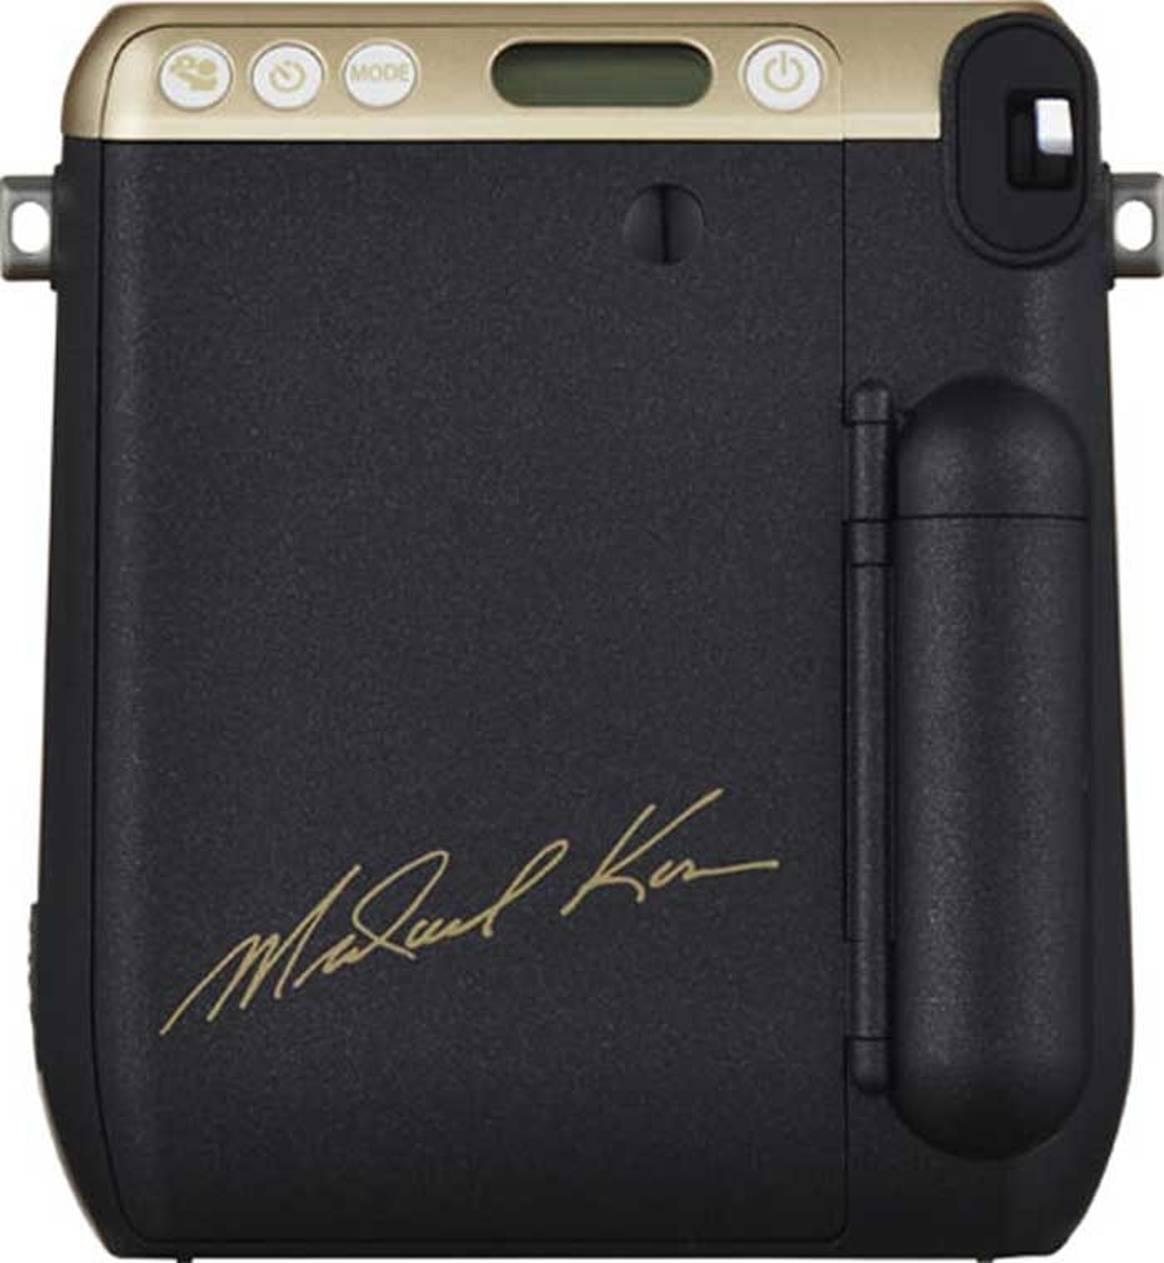 Michael Kors x Fujifilm launch limited edition Instax